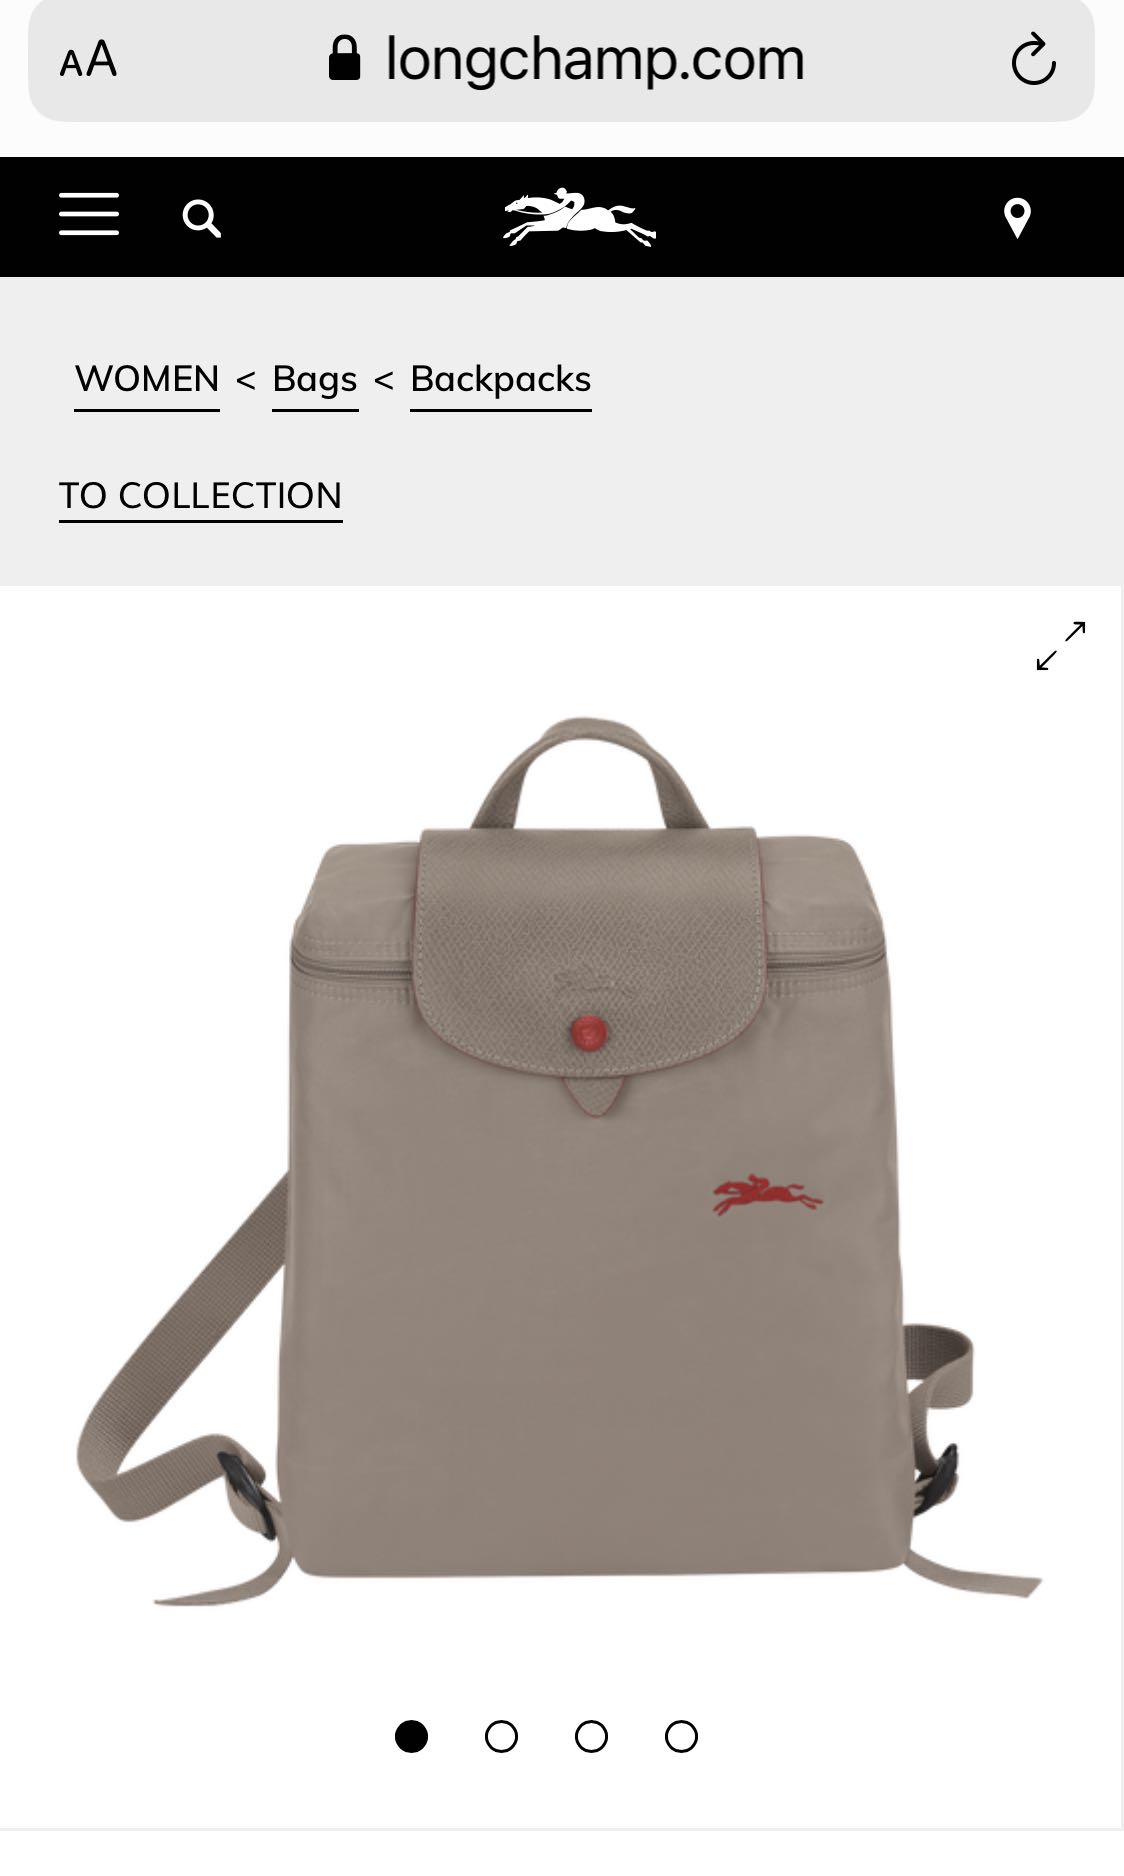 longchamp backpack original price